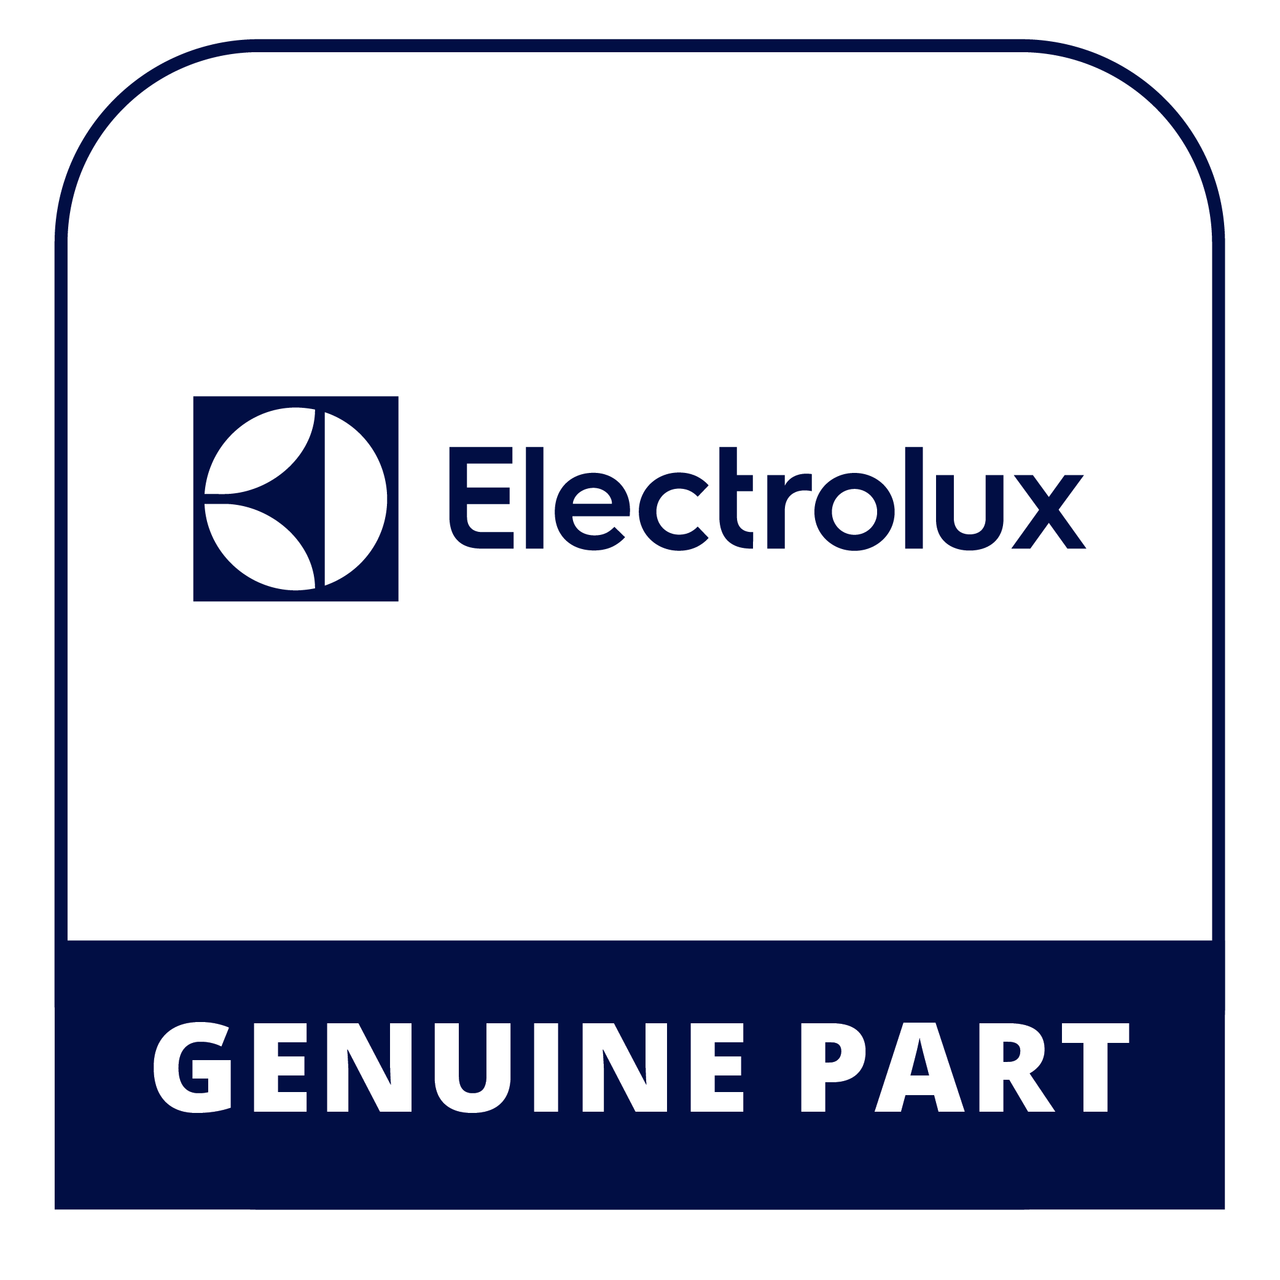 Frigidaire - Electrolux 242125910 Handle - Genuine Electrolux Part